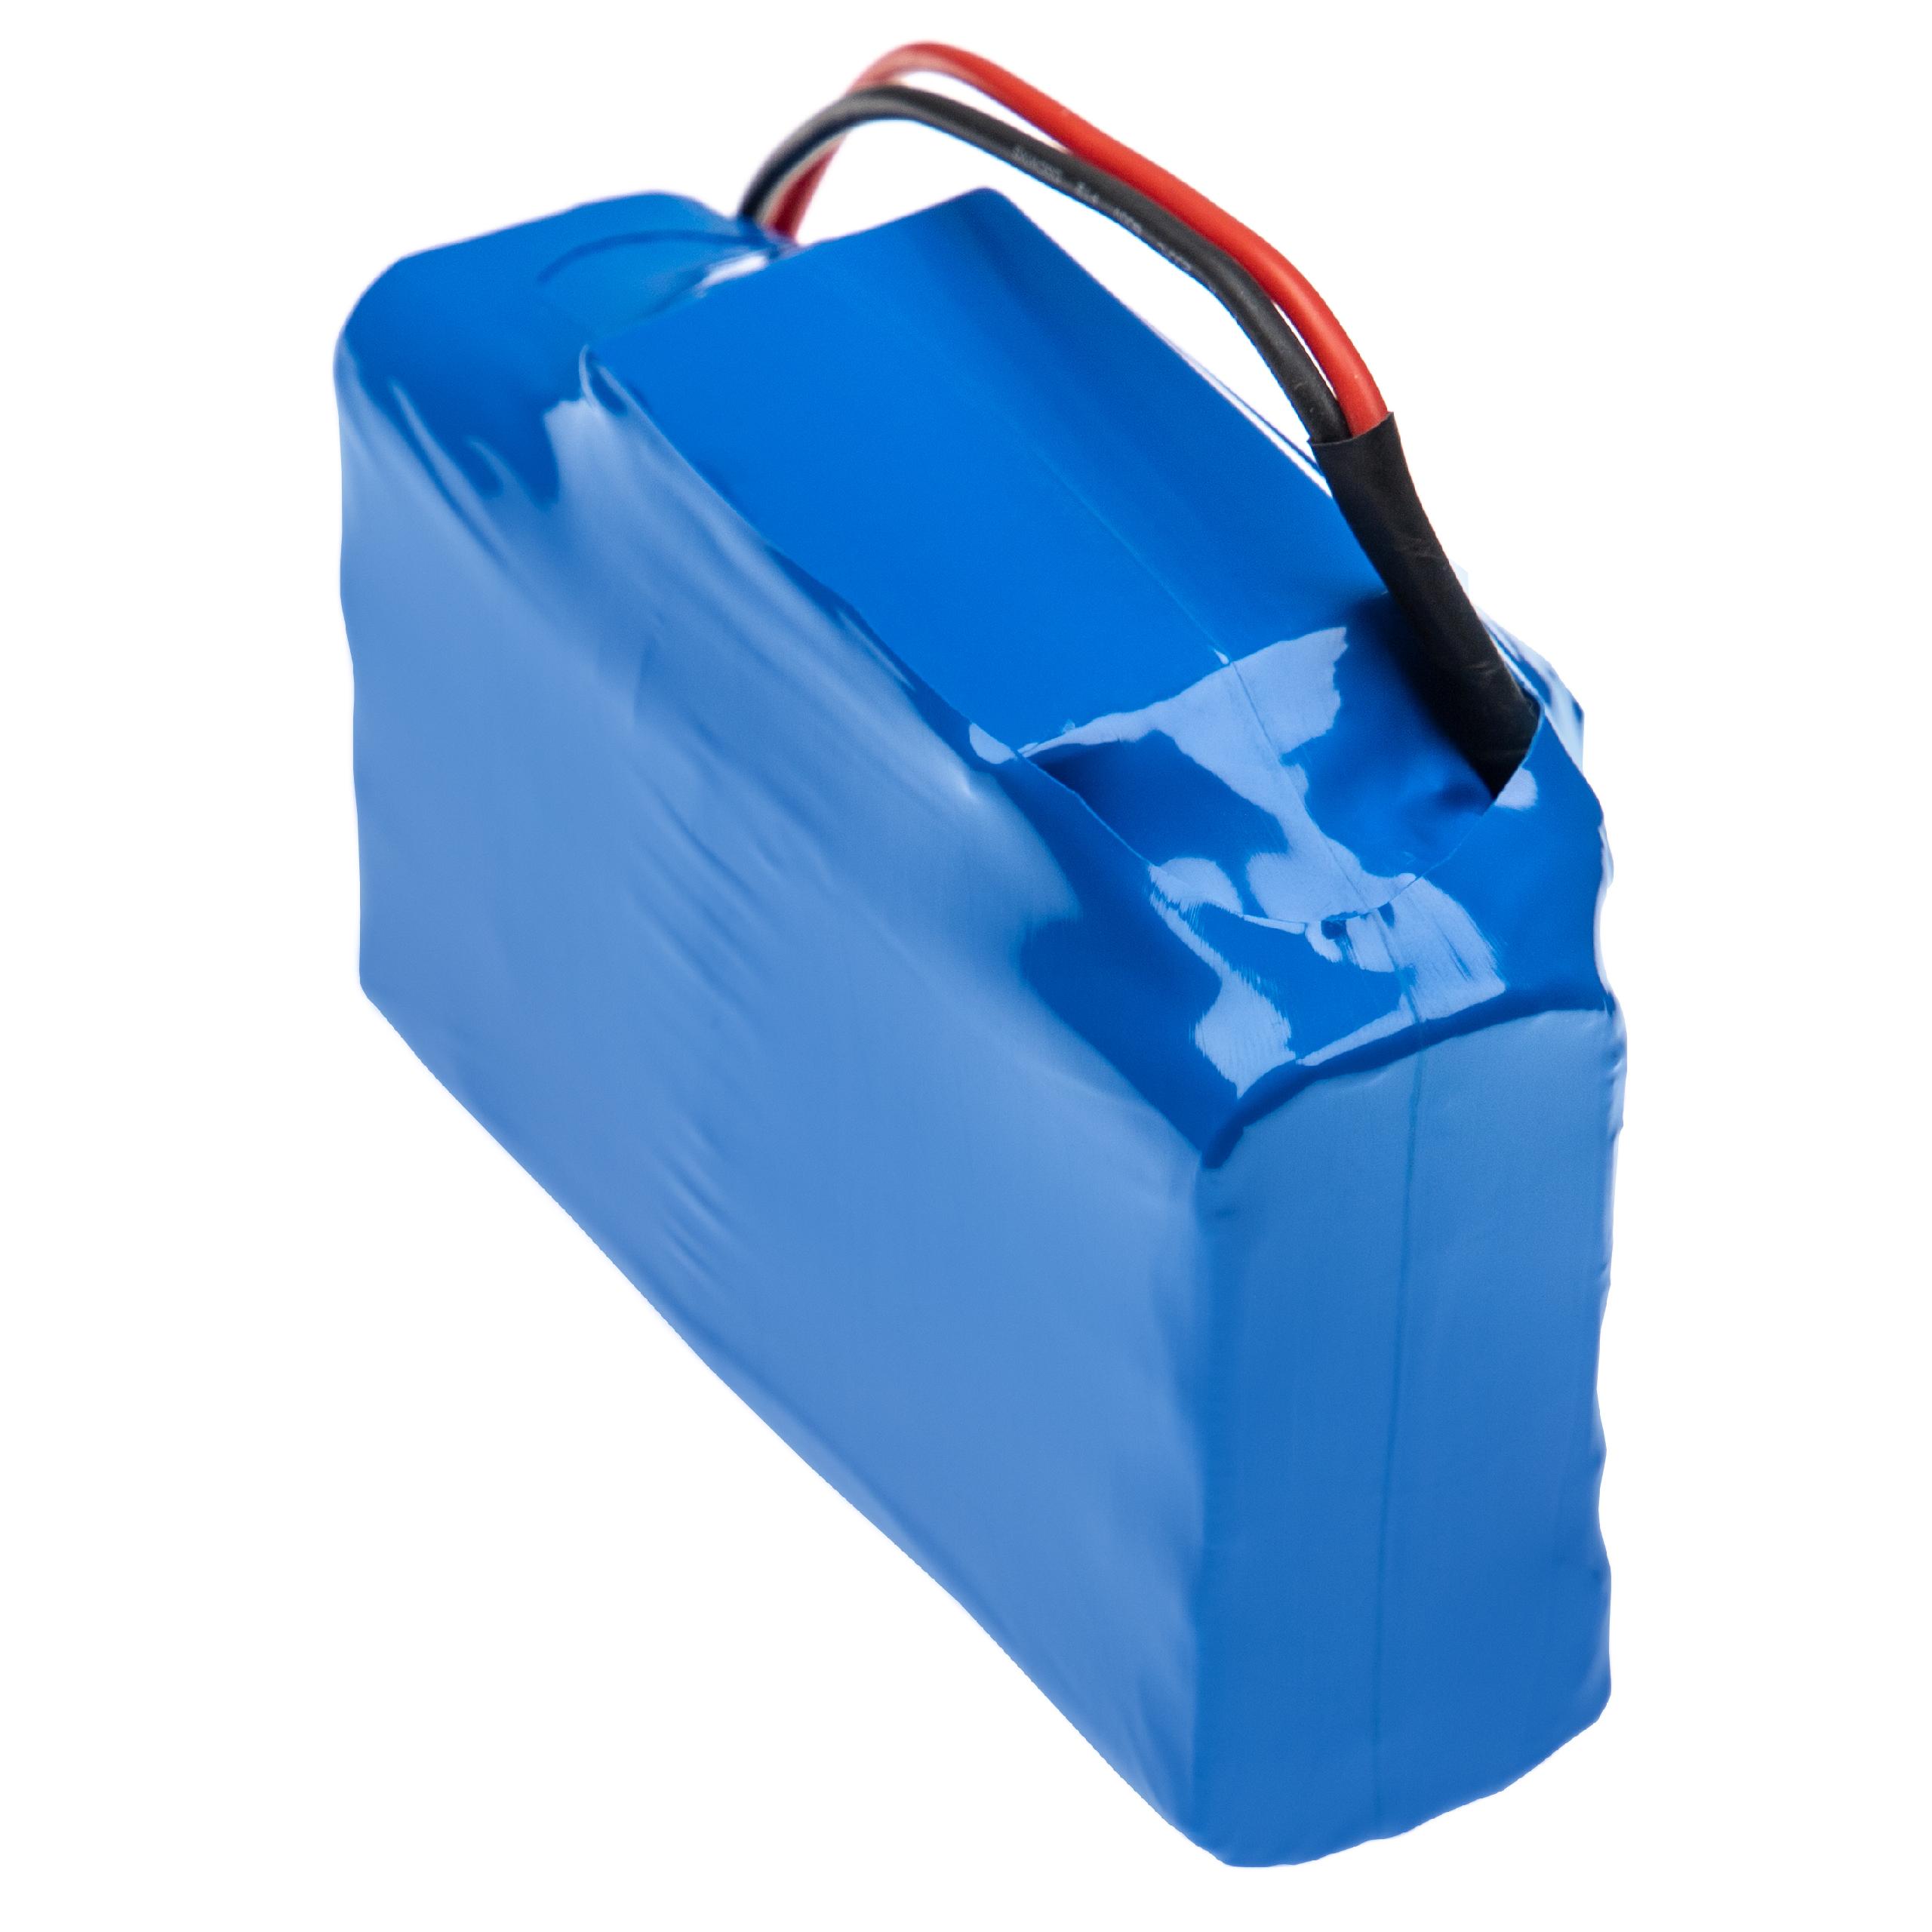 Akumulator do hoverboard zam. Bluewheel 10IXR19/65-2, HPK-11 - 5200 mAh 36 V Li-Ion